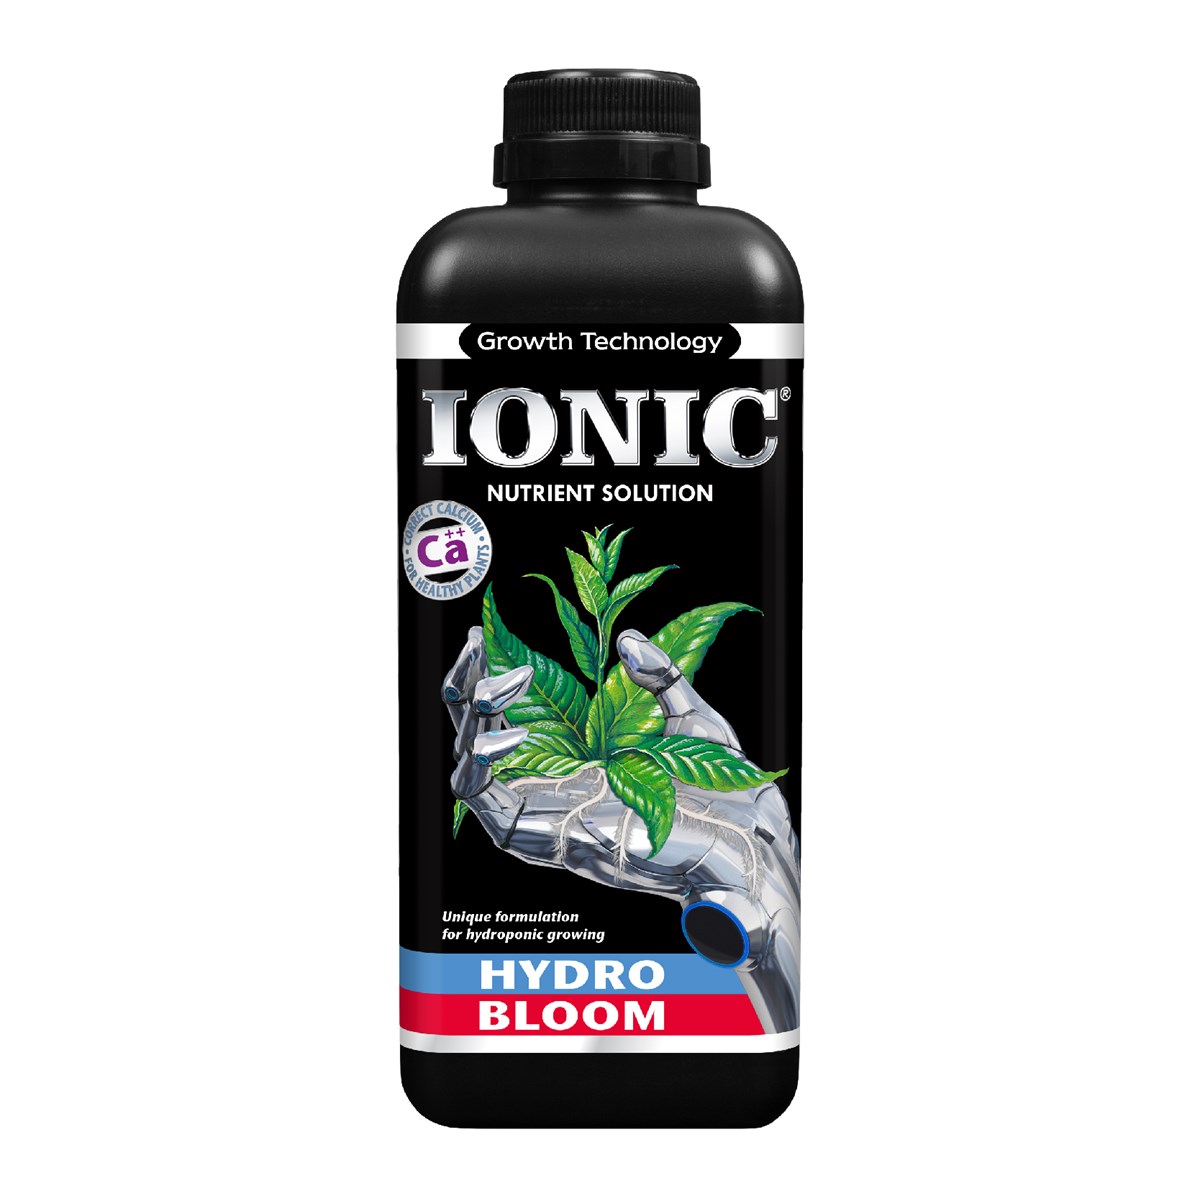 IONIC Hydro Bloom